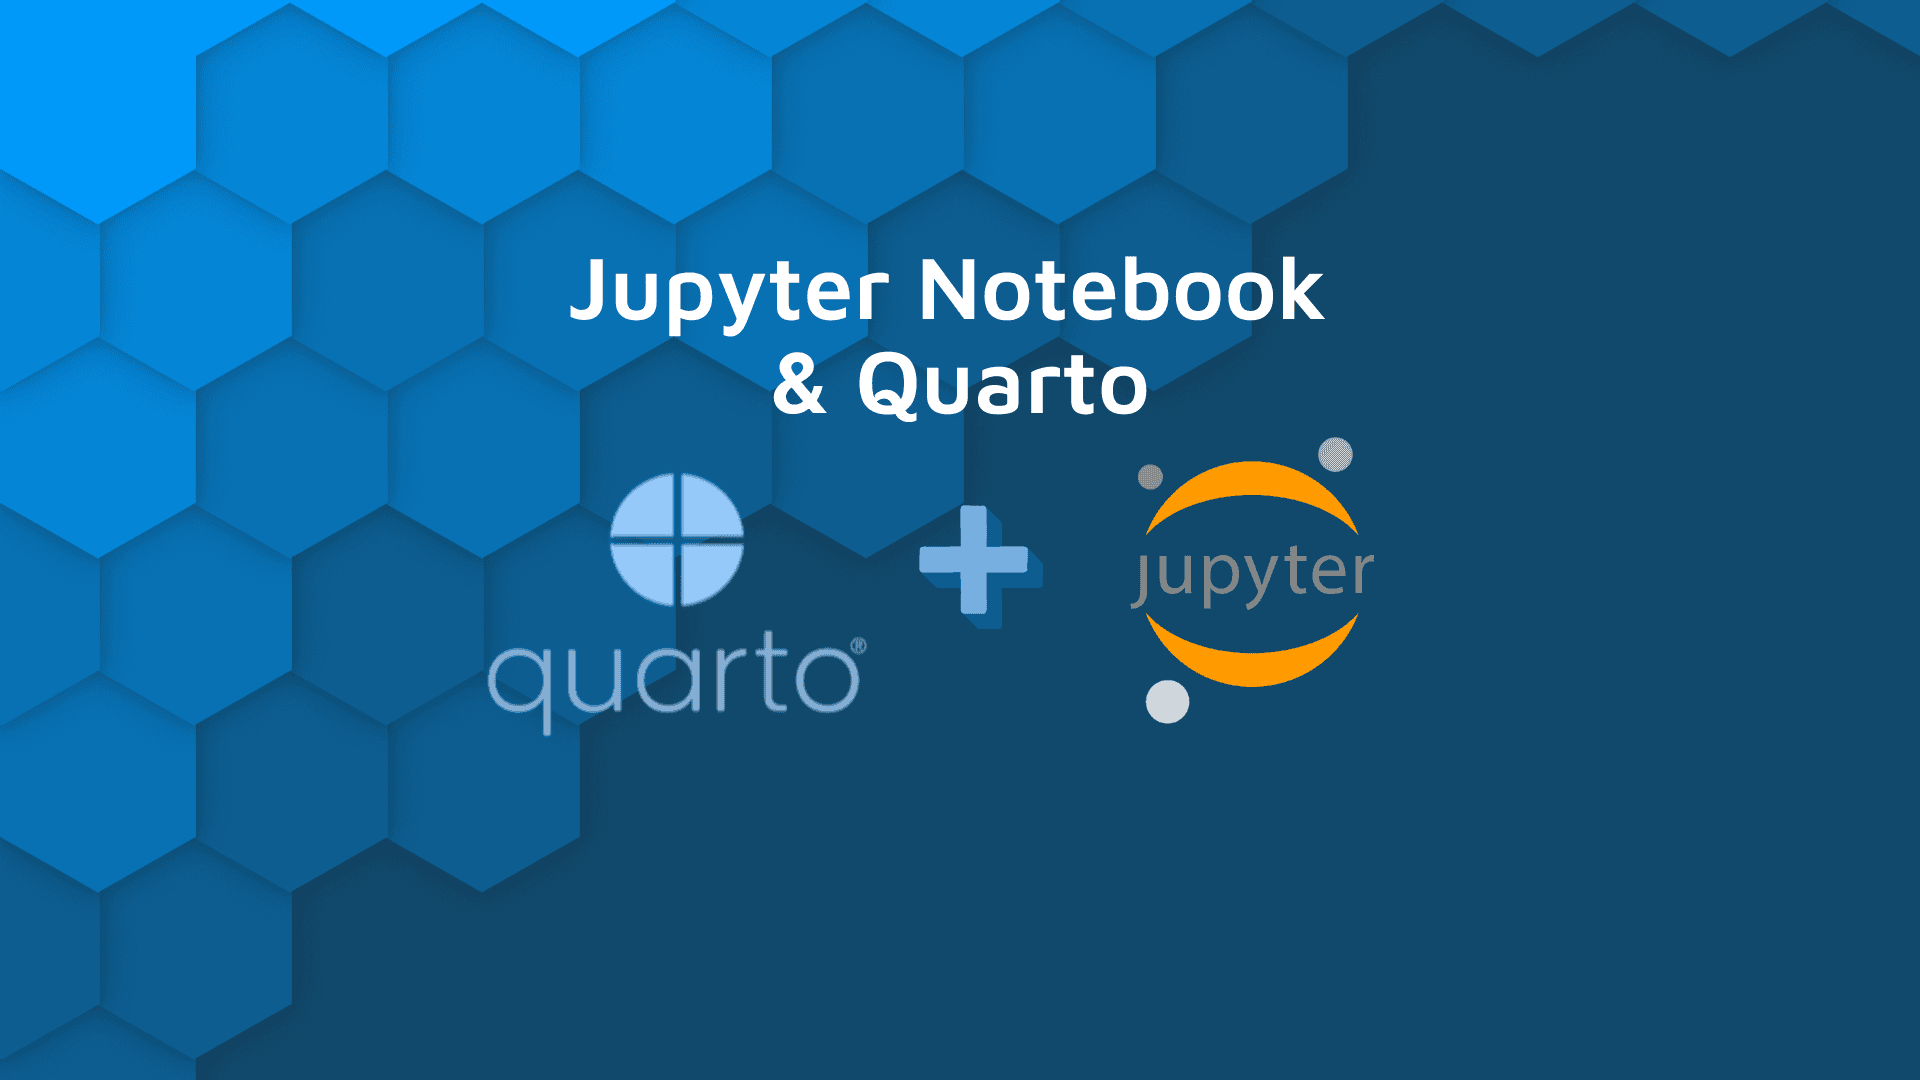 Blog hero background with white text, "Jupyter Notebook & Quarto" above quarto and jupyter logos